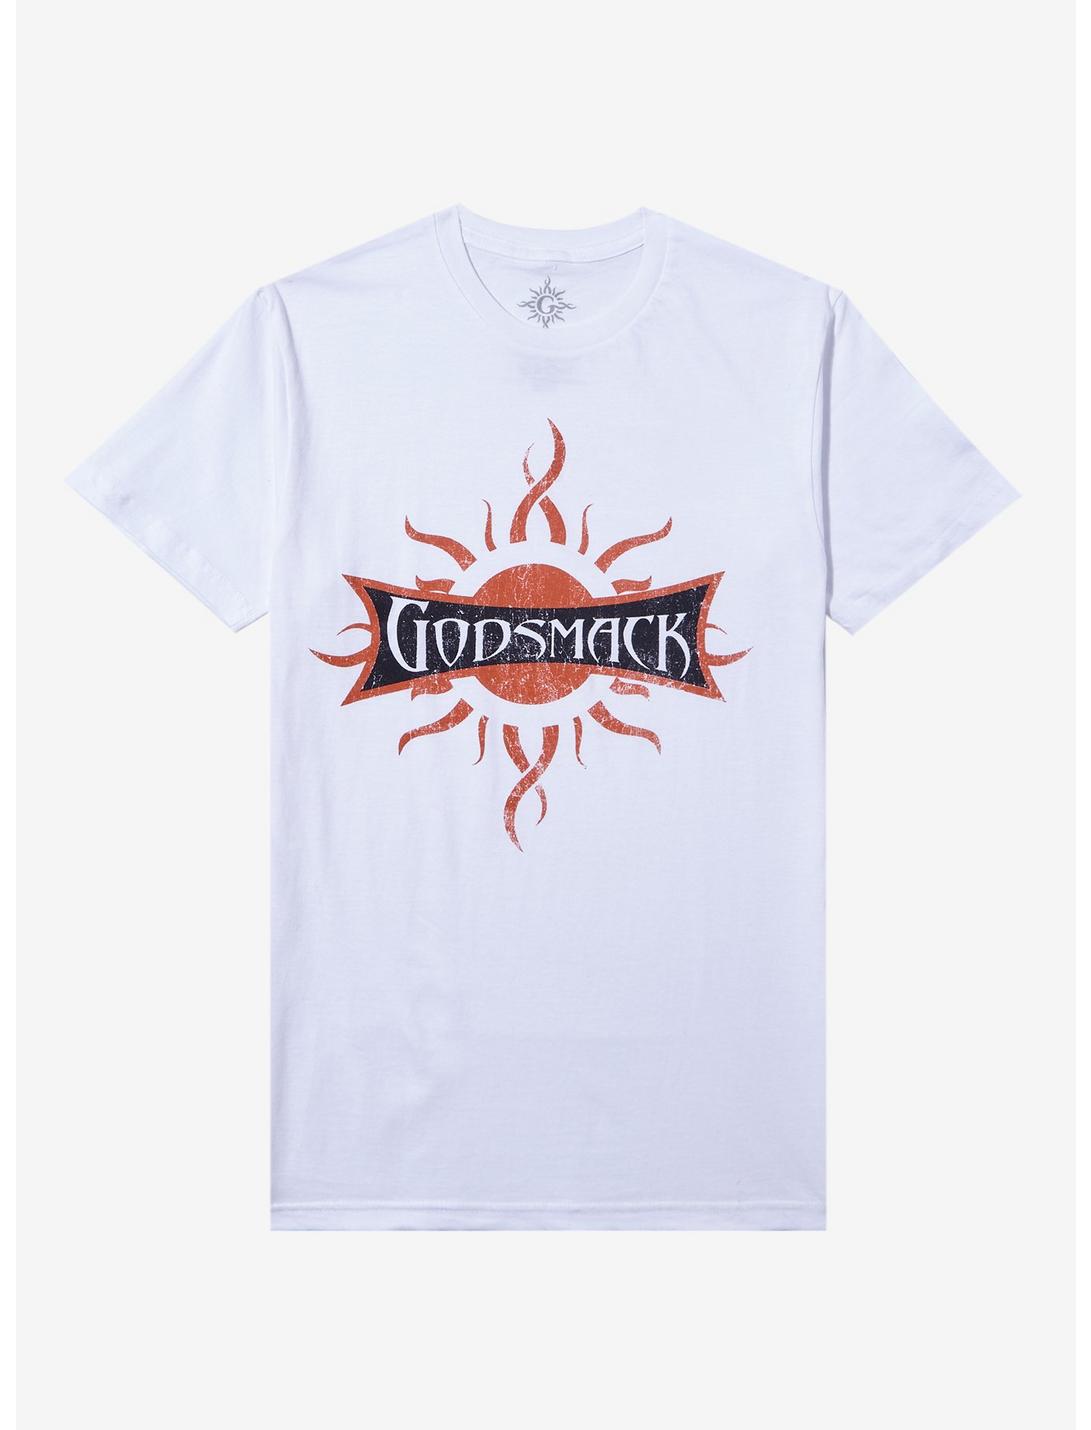 Godsmack Logo Boyfriend Fit Girls T-Shirt, BRIGHT WHITE, hi-res